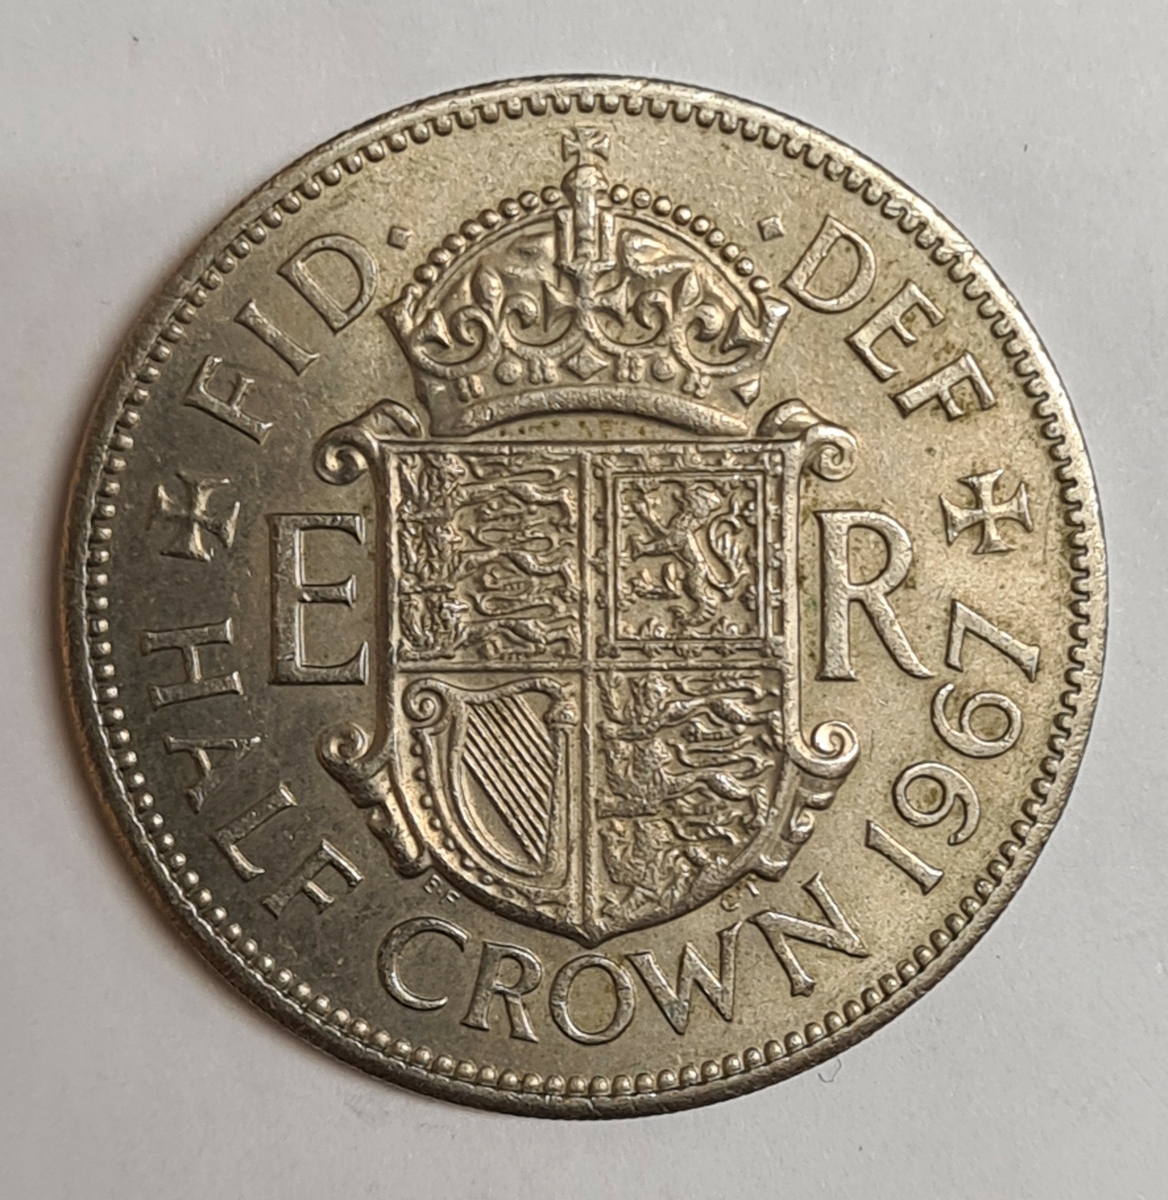 Ett mynt från Storbritanien.
One Half Crown